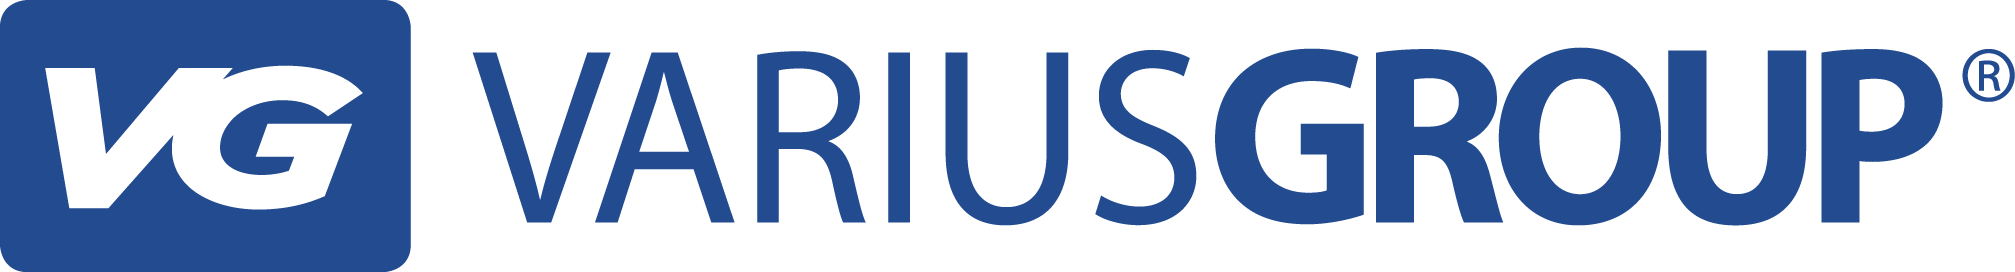 Varius Group Logo 01 01